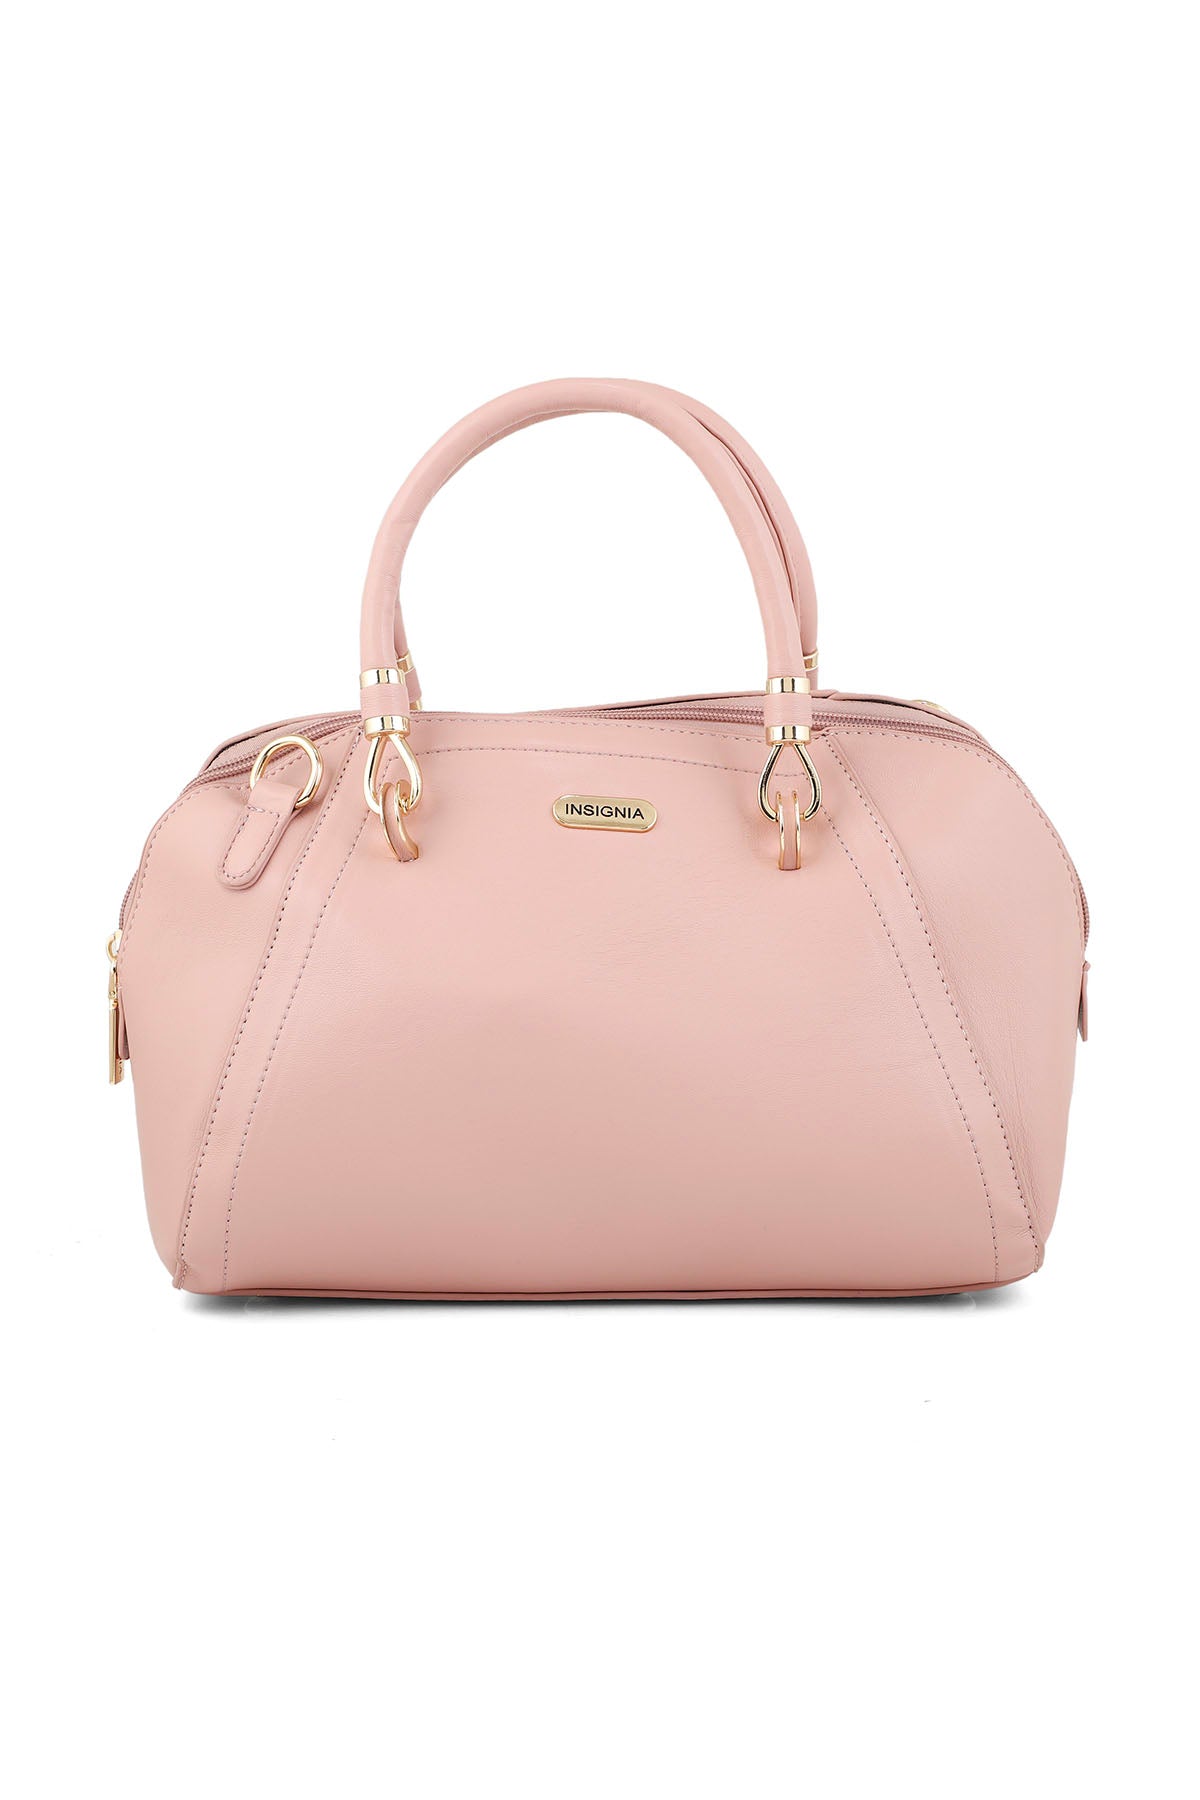 Bowling Hand Bags B15067-Pink